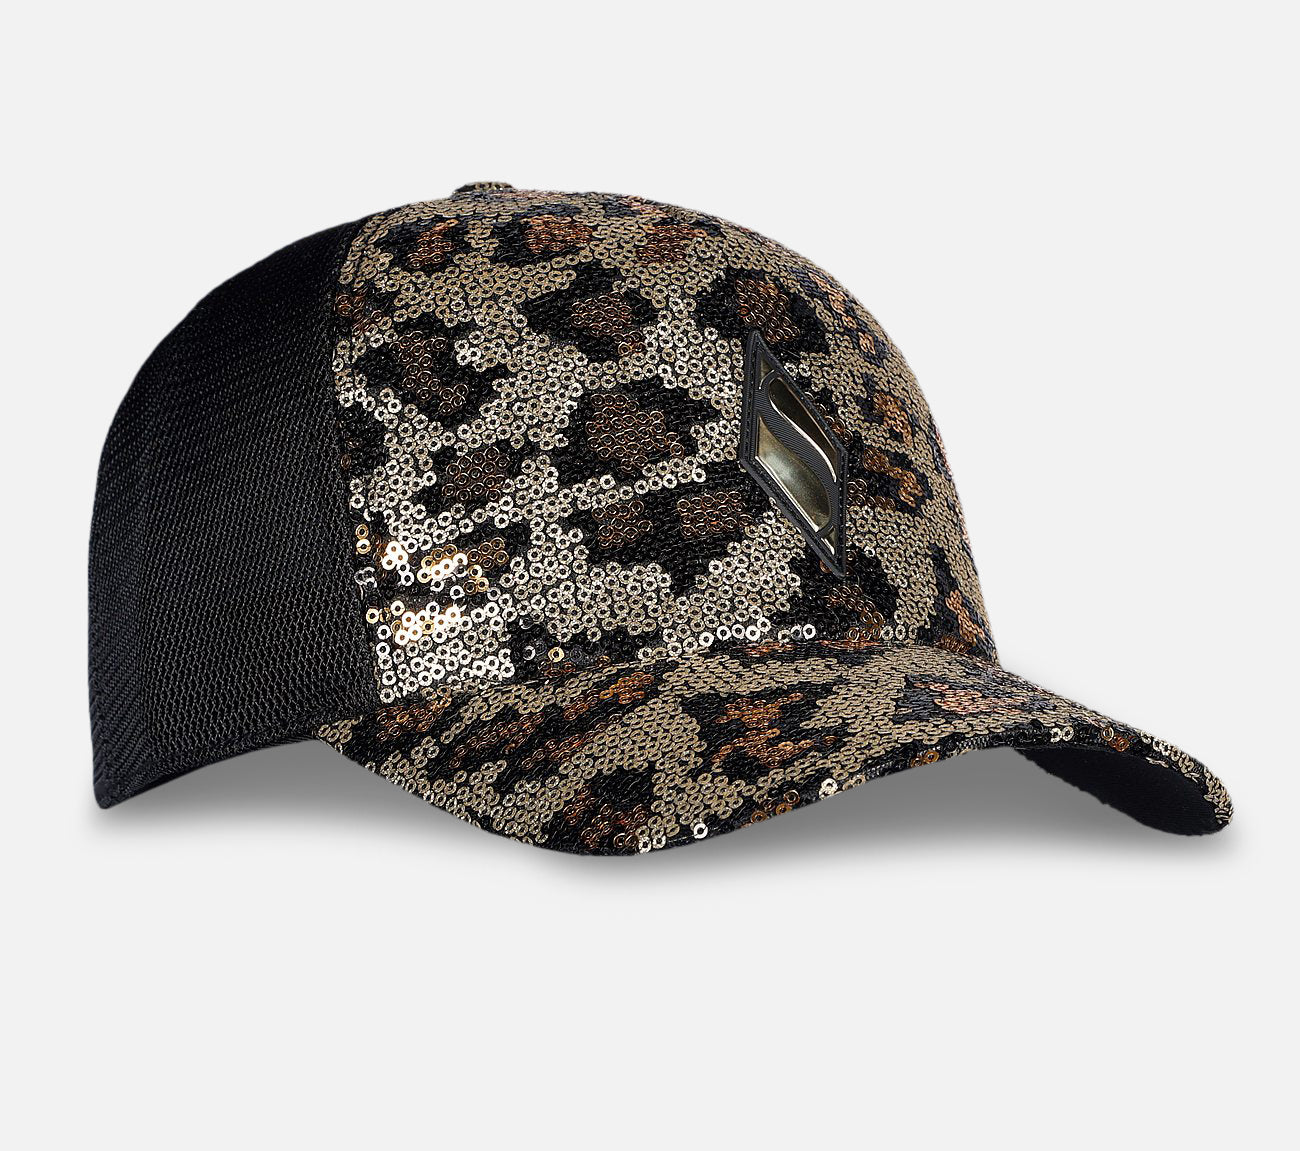 Skech-Shine Cheetah Adjustable Trucker Hat